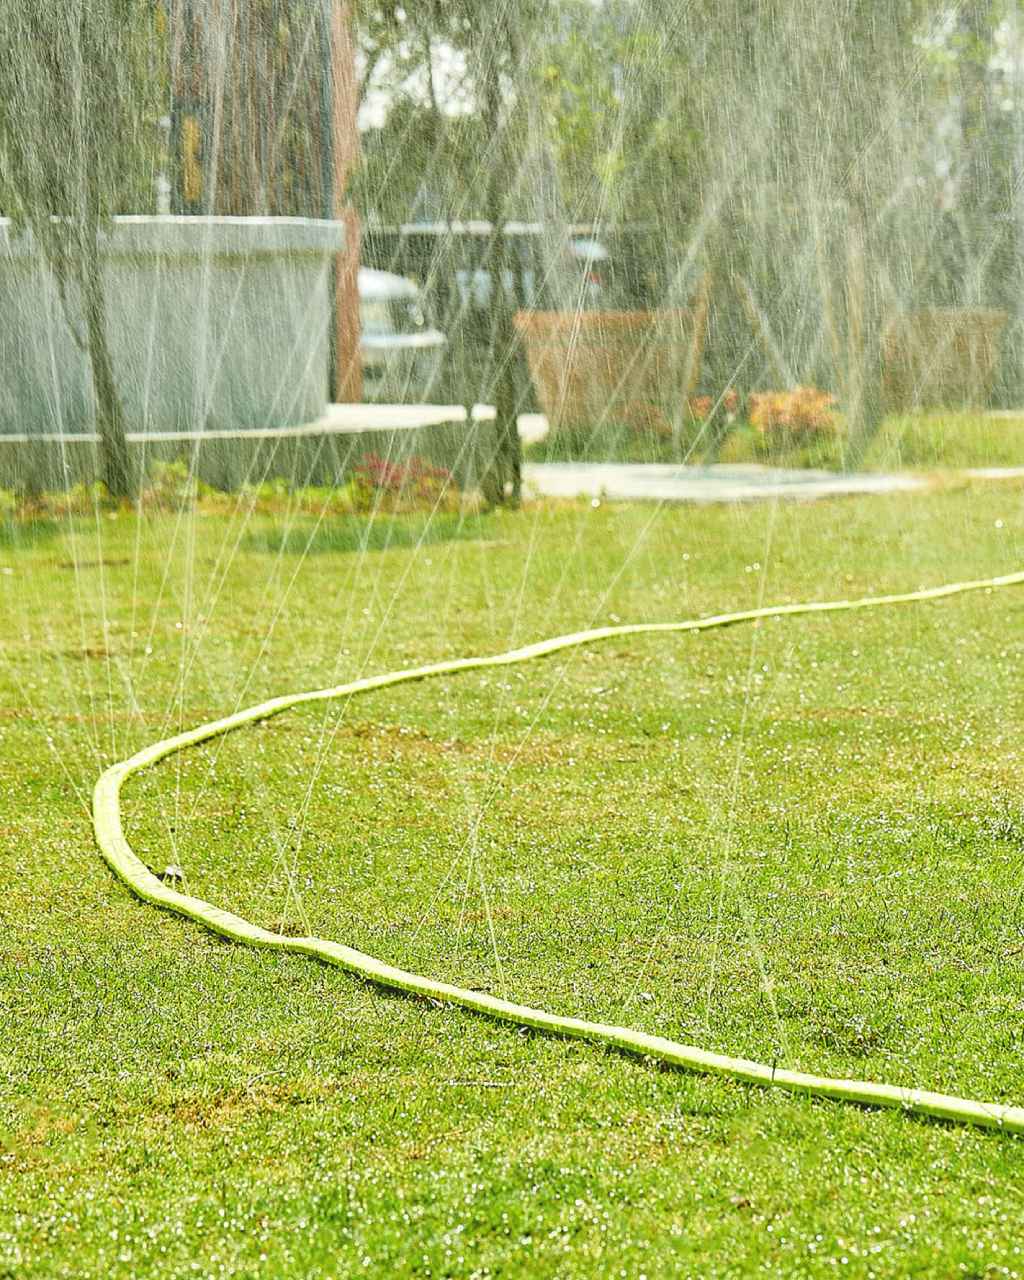 Paraden Hose series sprinkler hose scenario